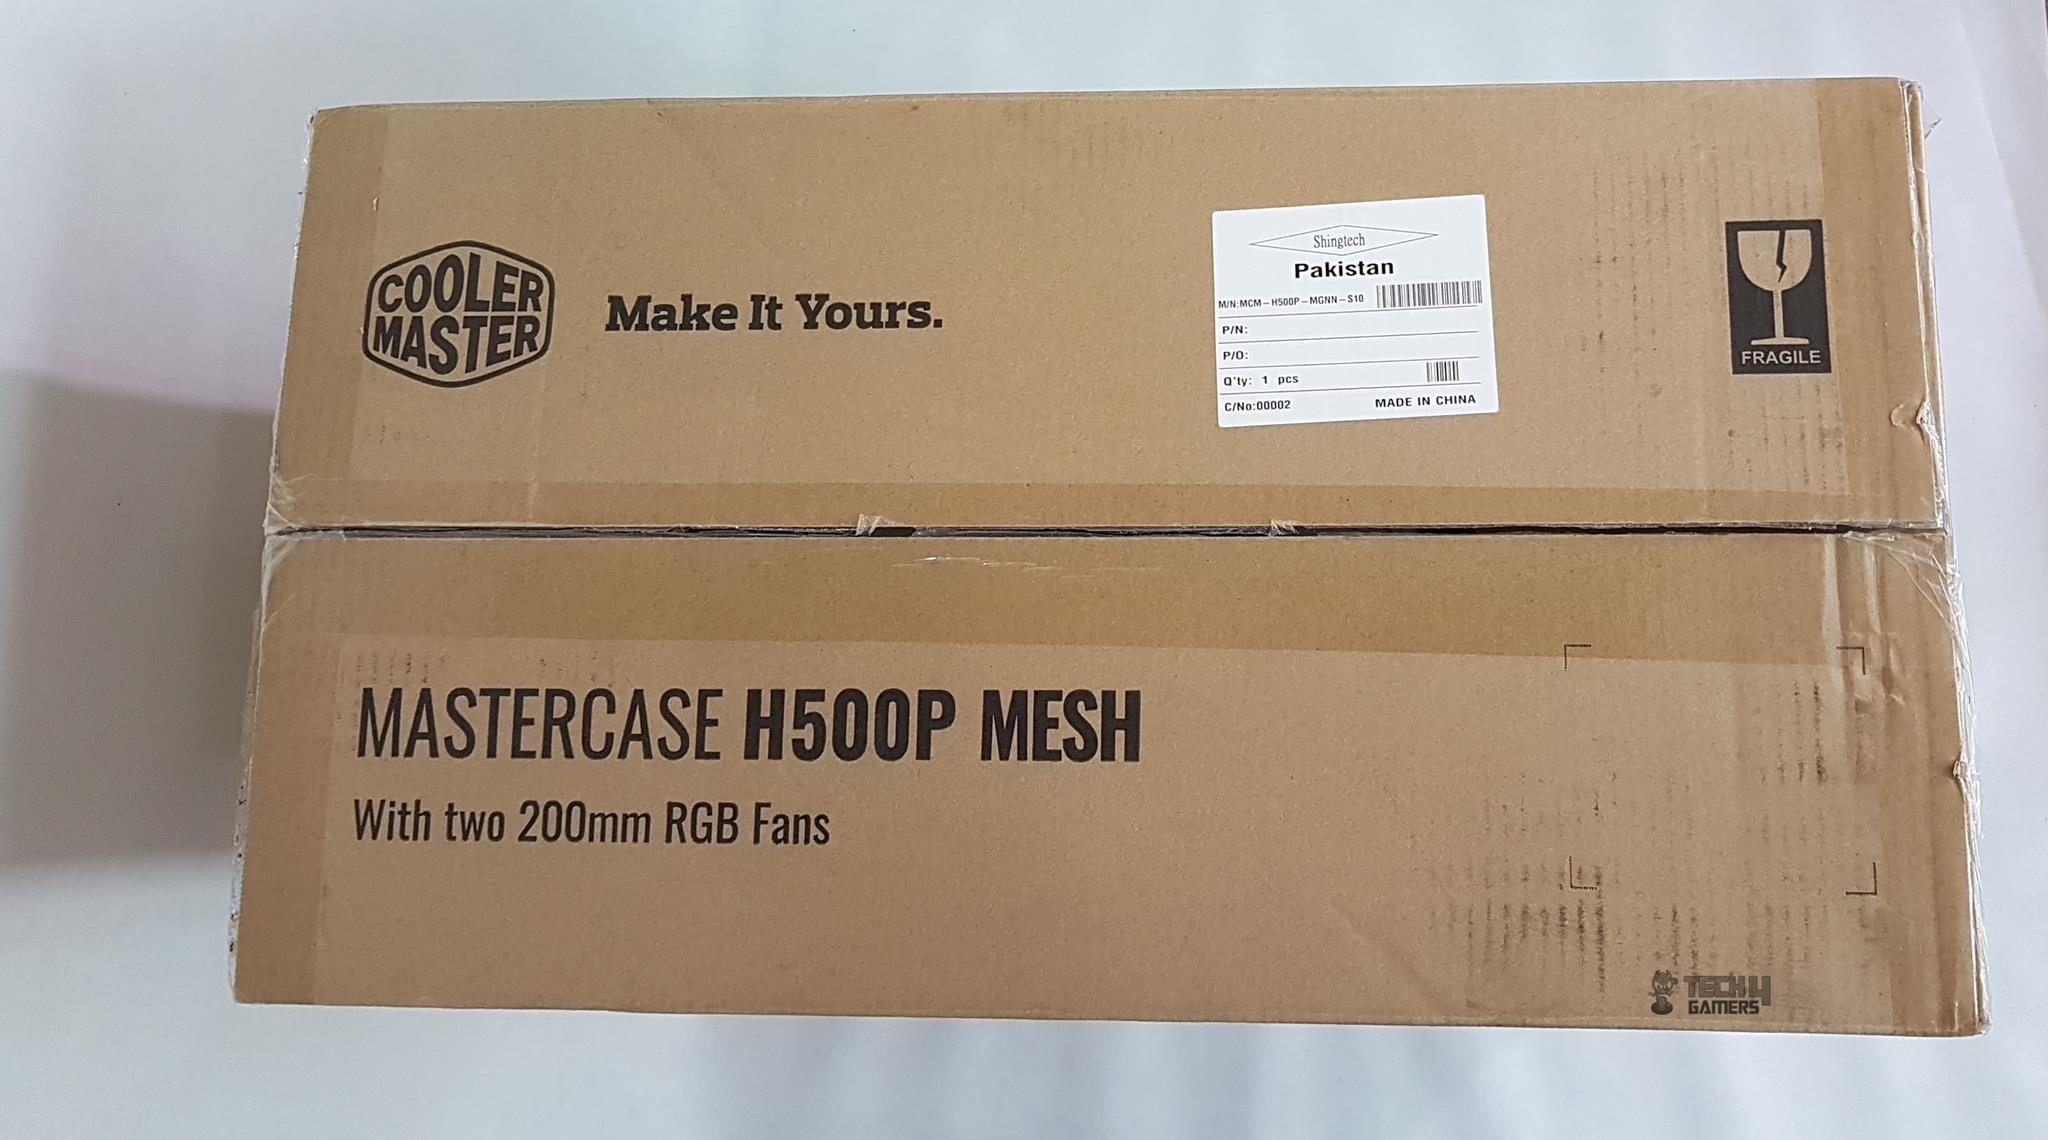 MasterCase H500P upercase Packaging 